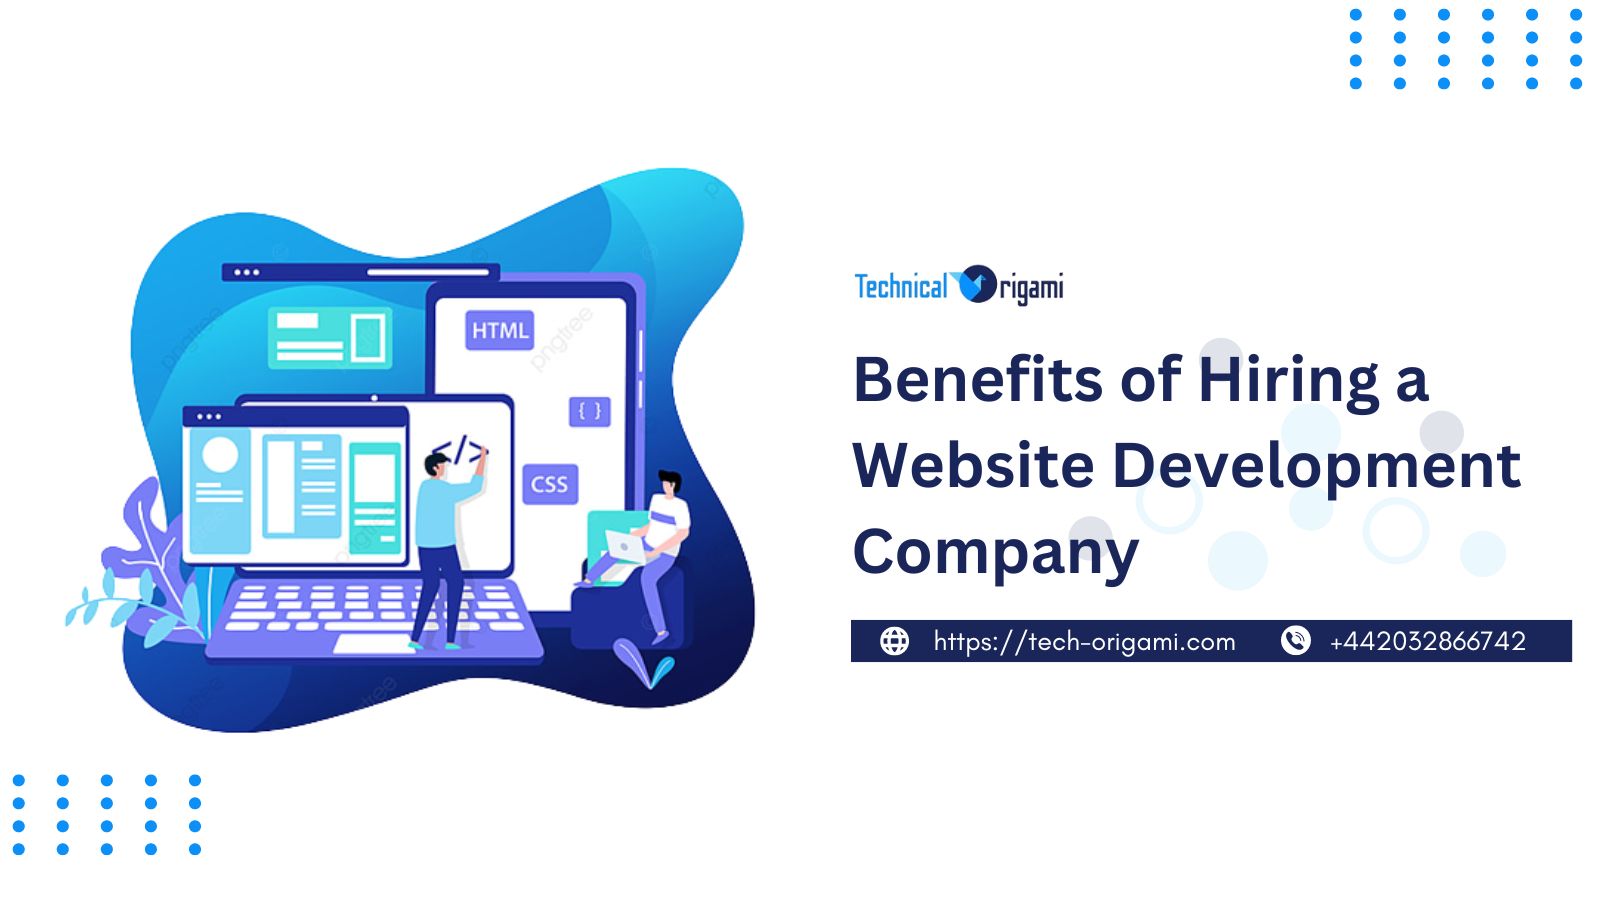 Benefits of Hiring a Website Development Company